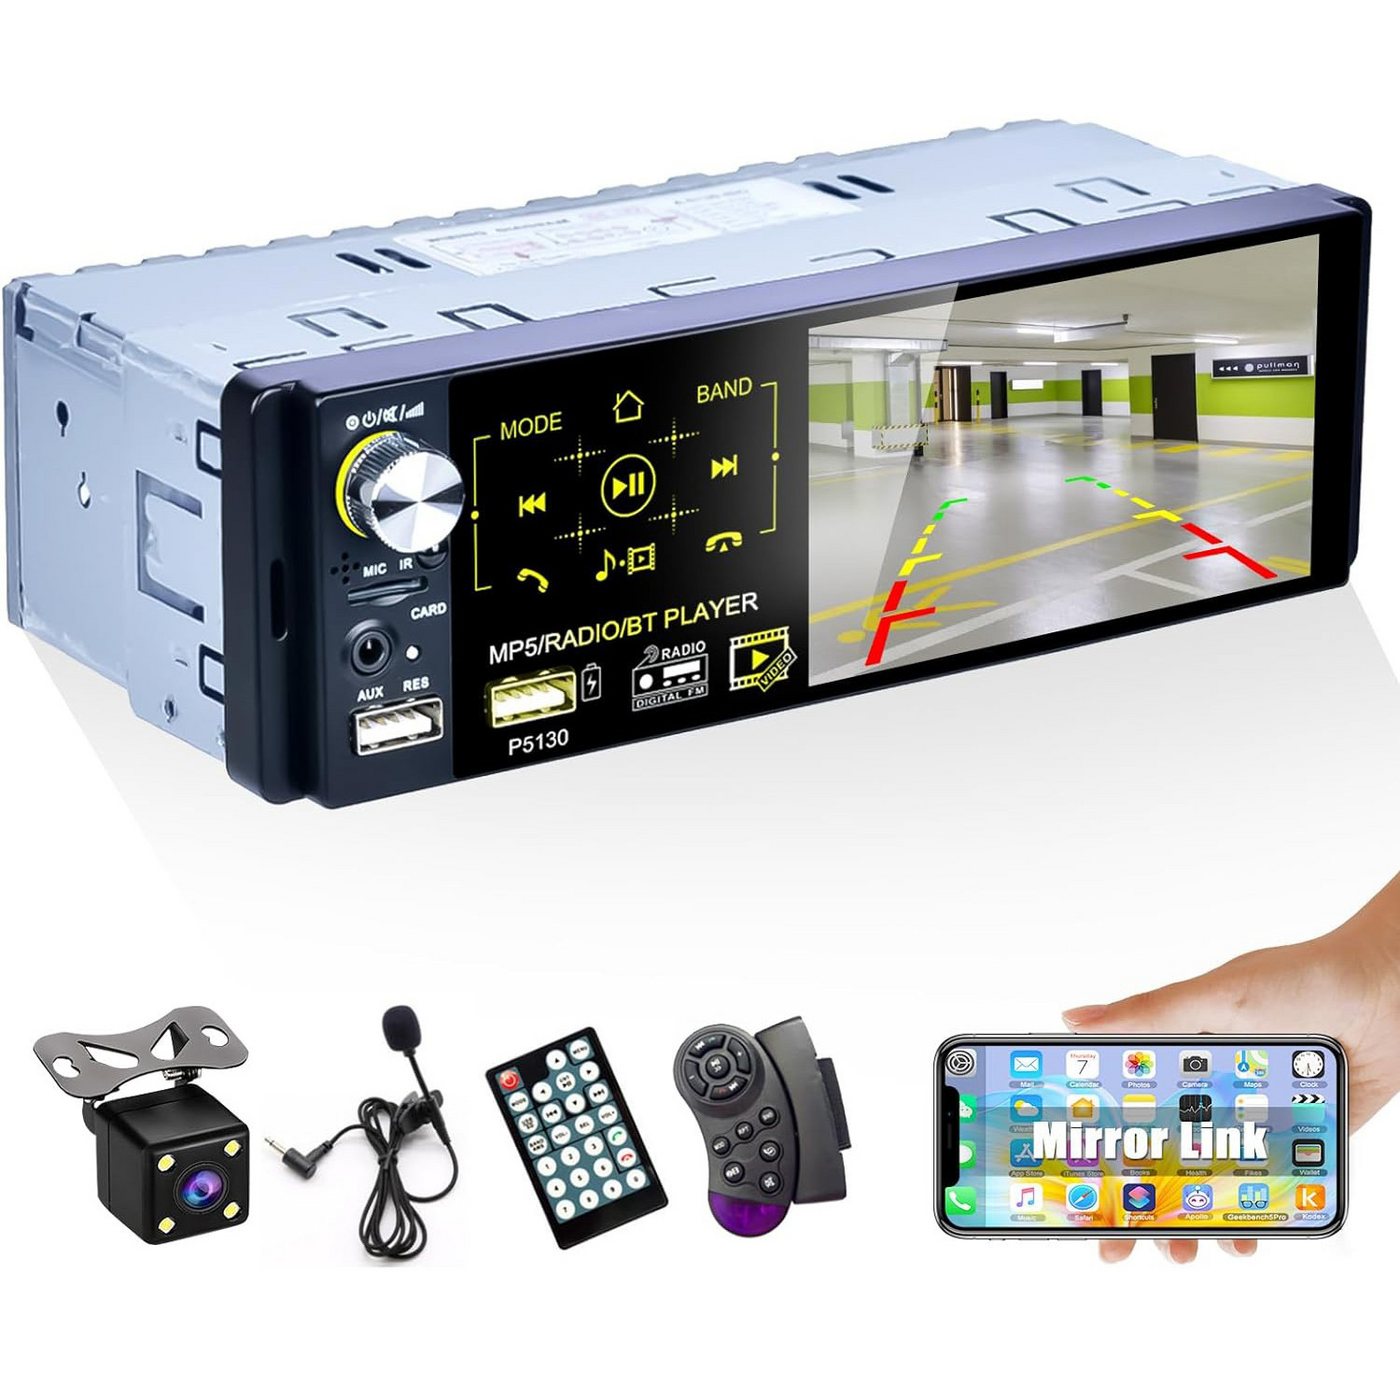 Hikity 4 Zoll kapazitiver Touchscreen Single DIN Autoradio mit Kamera Autoradio (Steuerung über das Lenkrad, Two USB / AUX-In / SD Card) von Hikity